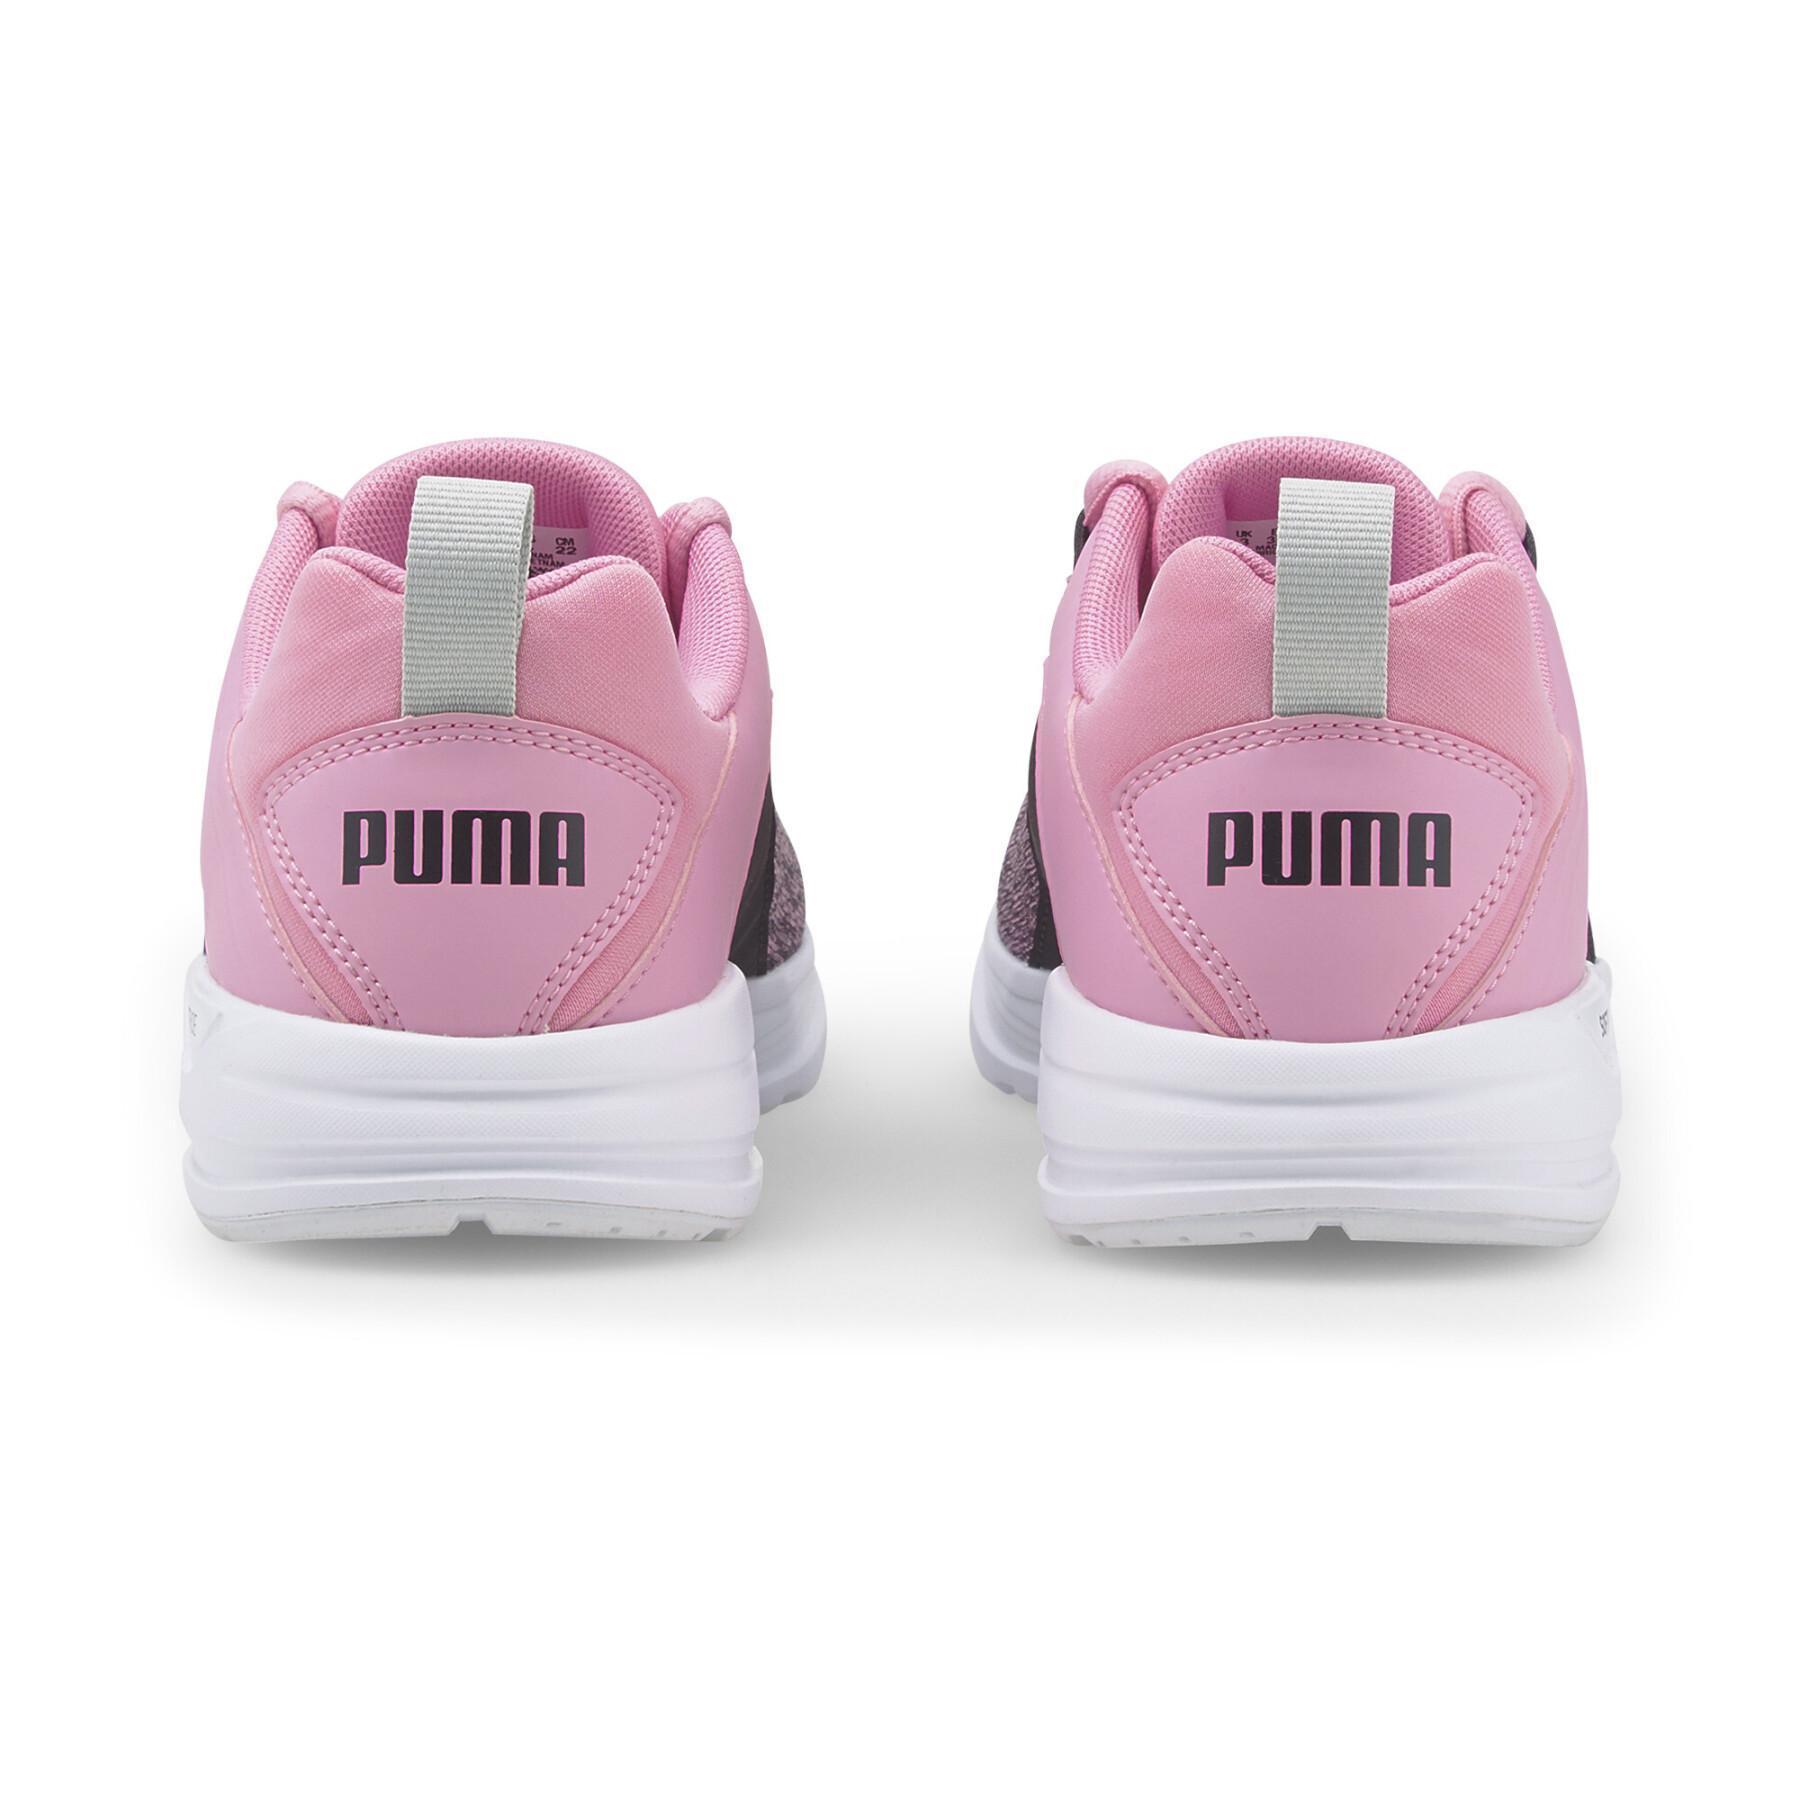 Schuhe Puma Comet 2 Alt